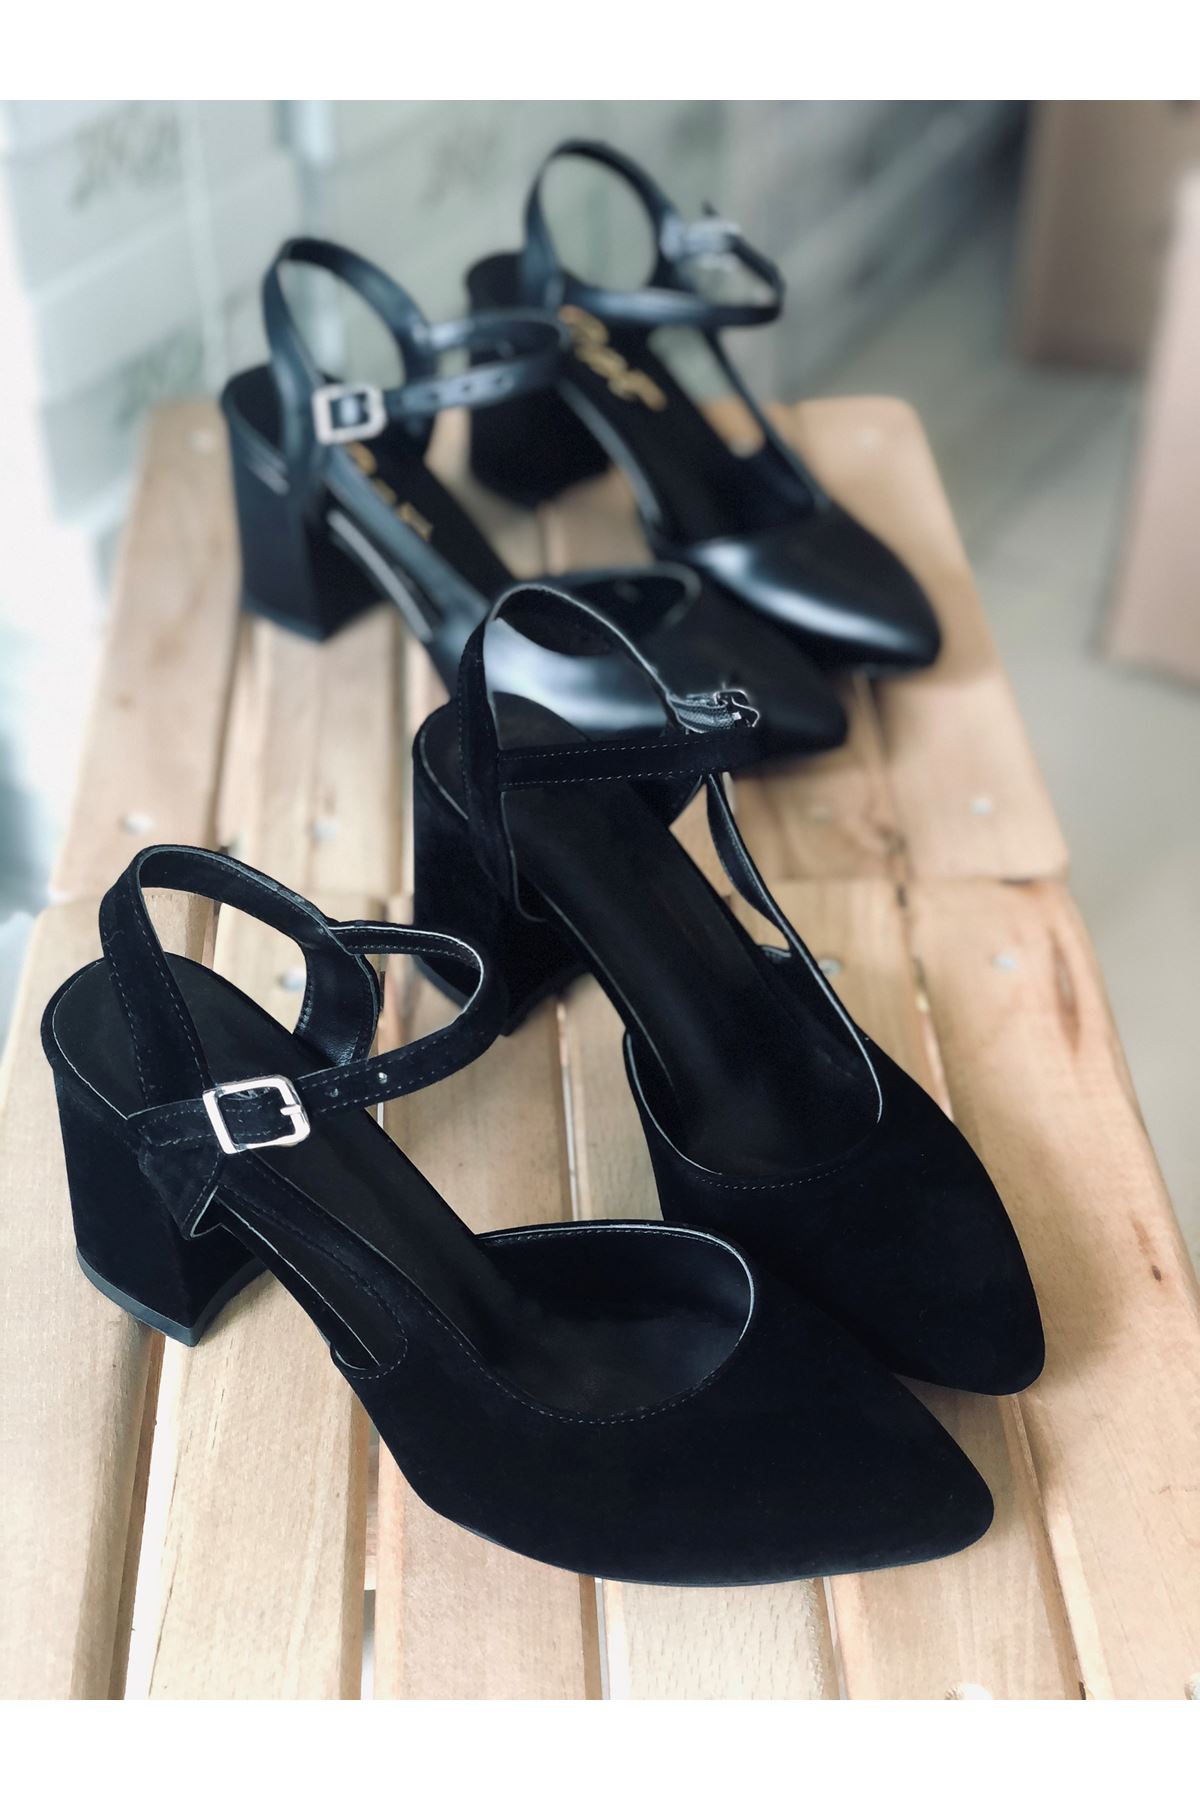 Mida Shoes Y104 Siyah Süet Topuklu Ayakkabı